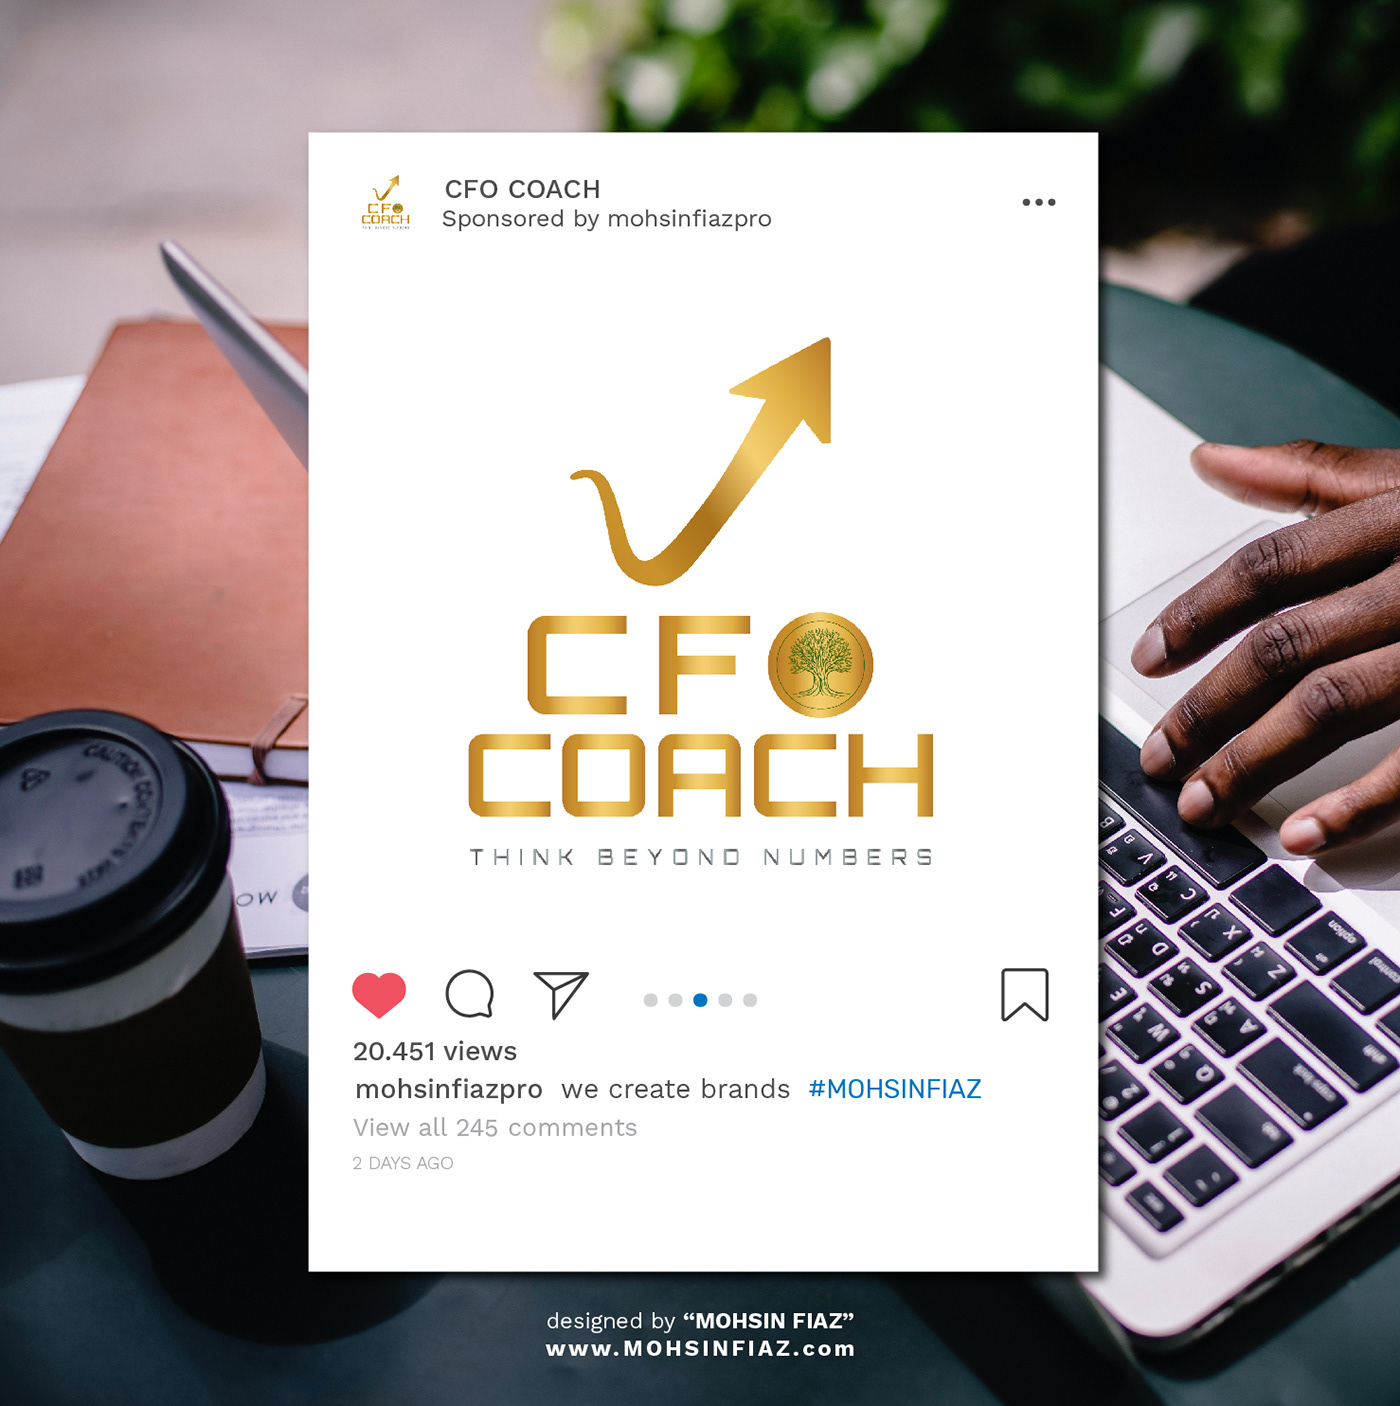 CFO Coach logo, business card, social media designs by MOHSIN FIAZ